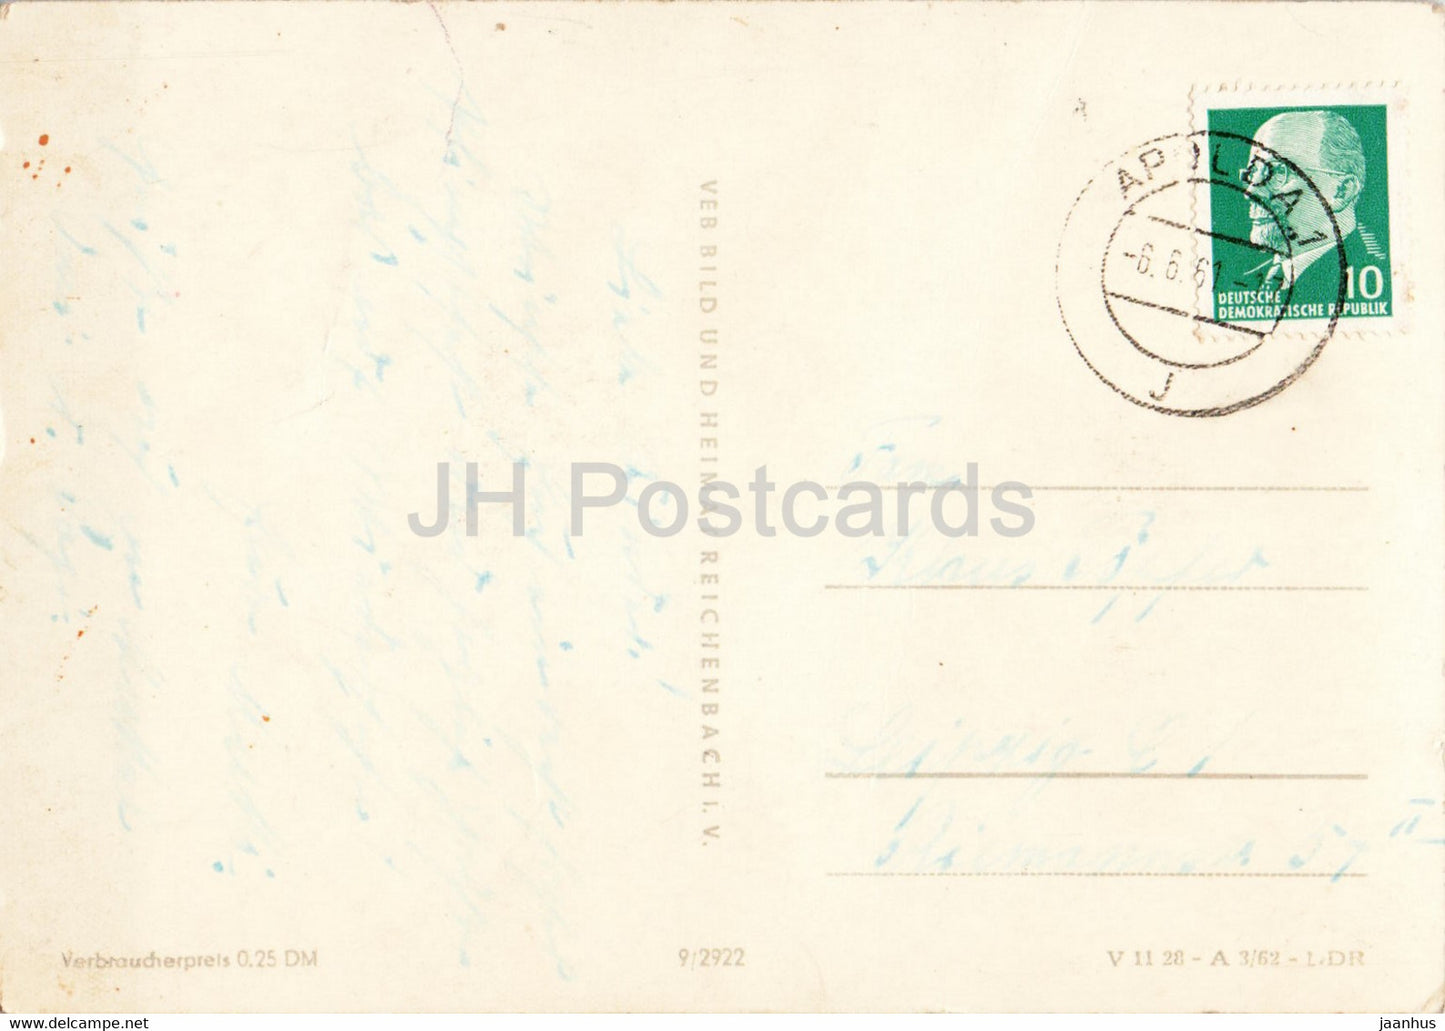 Gruss aus Apolda - HO Central Kaufhaus - Rathaus - Bahnhofstrasse - Viadukt - old postcard - 1961 - Germany DDR - used